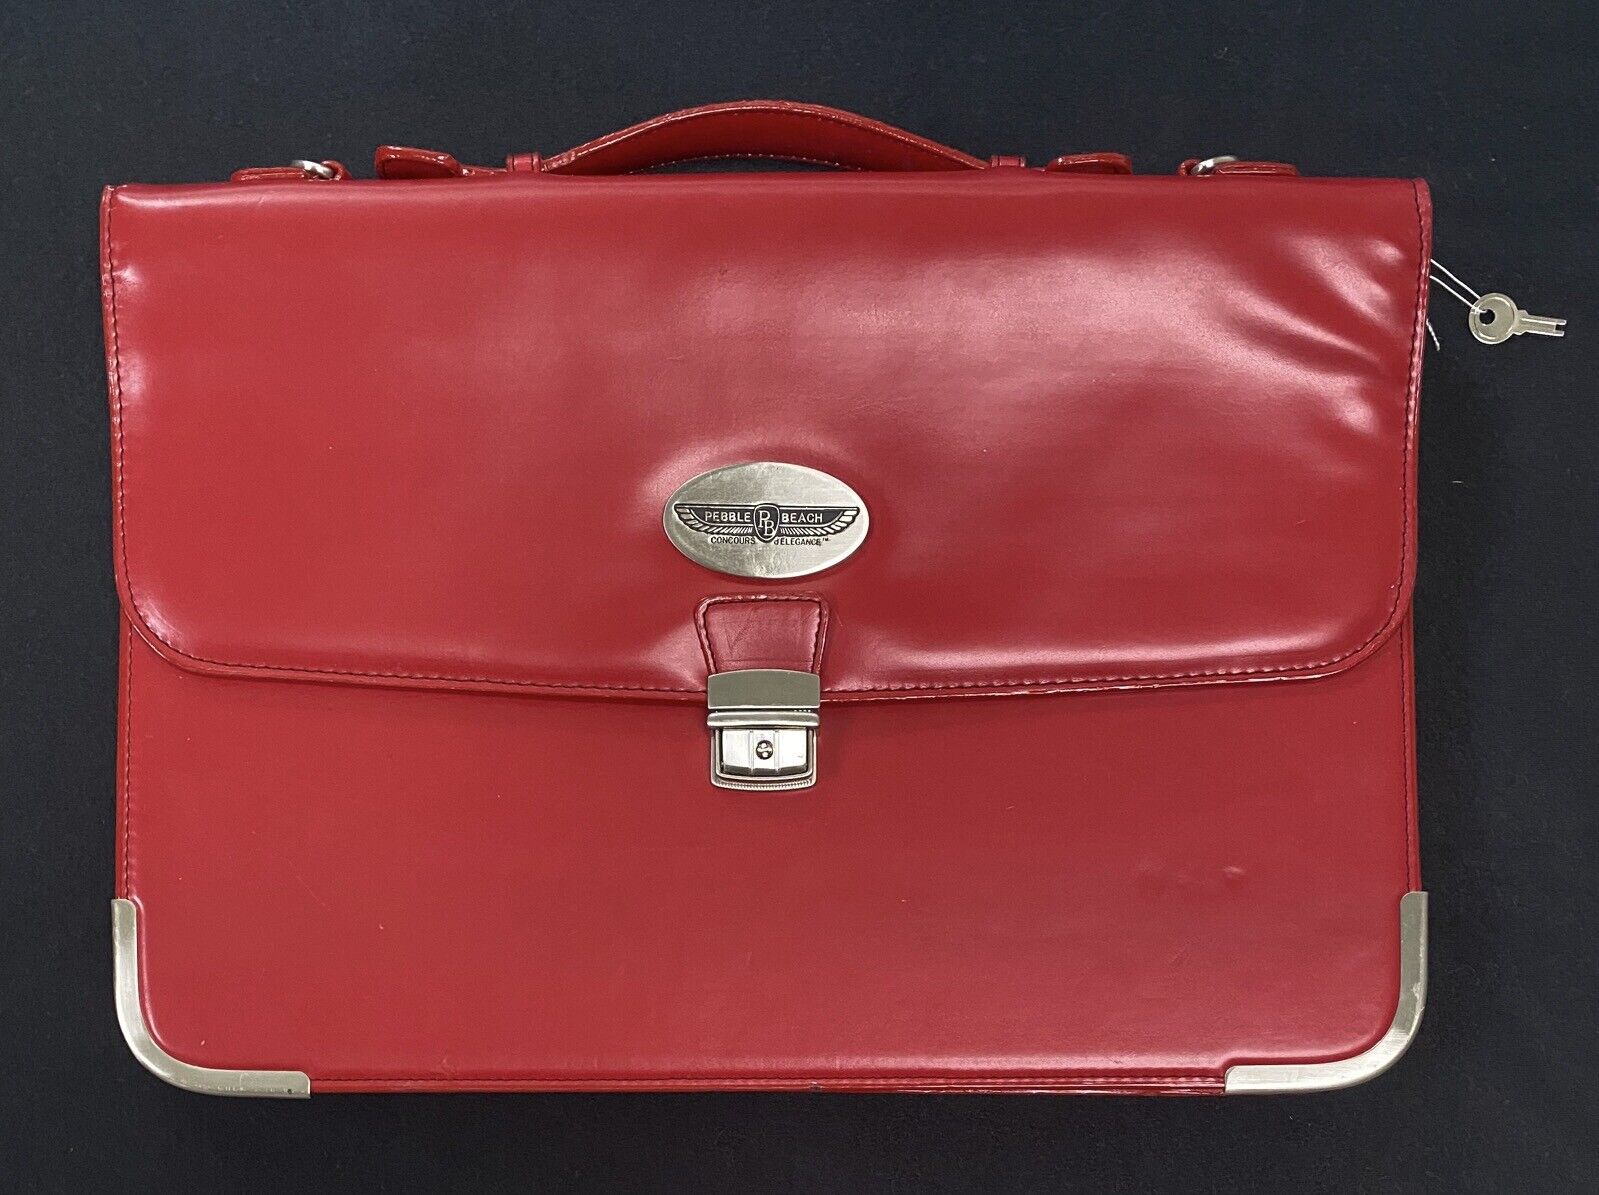 Pebble Beach Concours Red Leather-Look Briefcase Bag Handbag SHARP